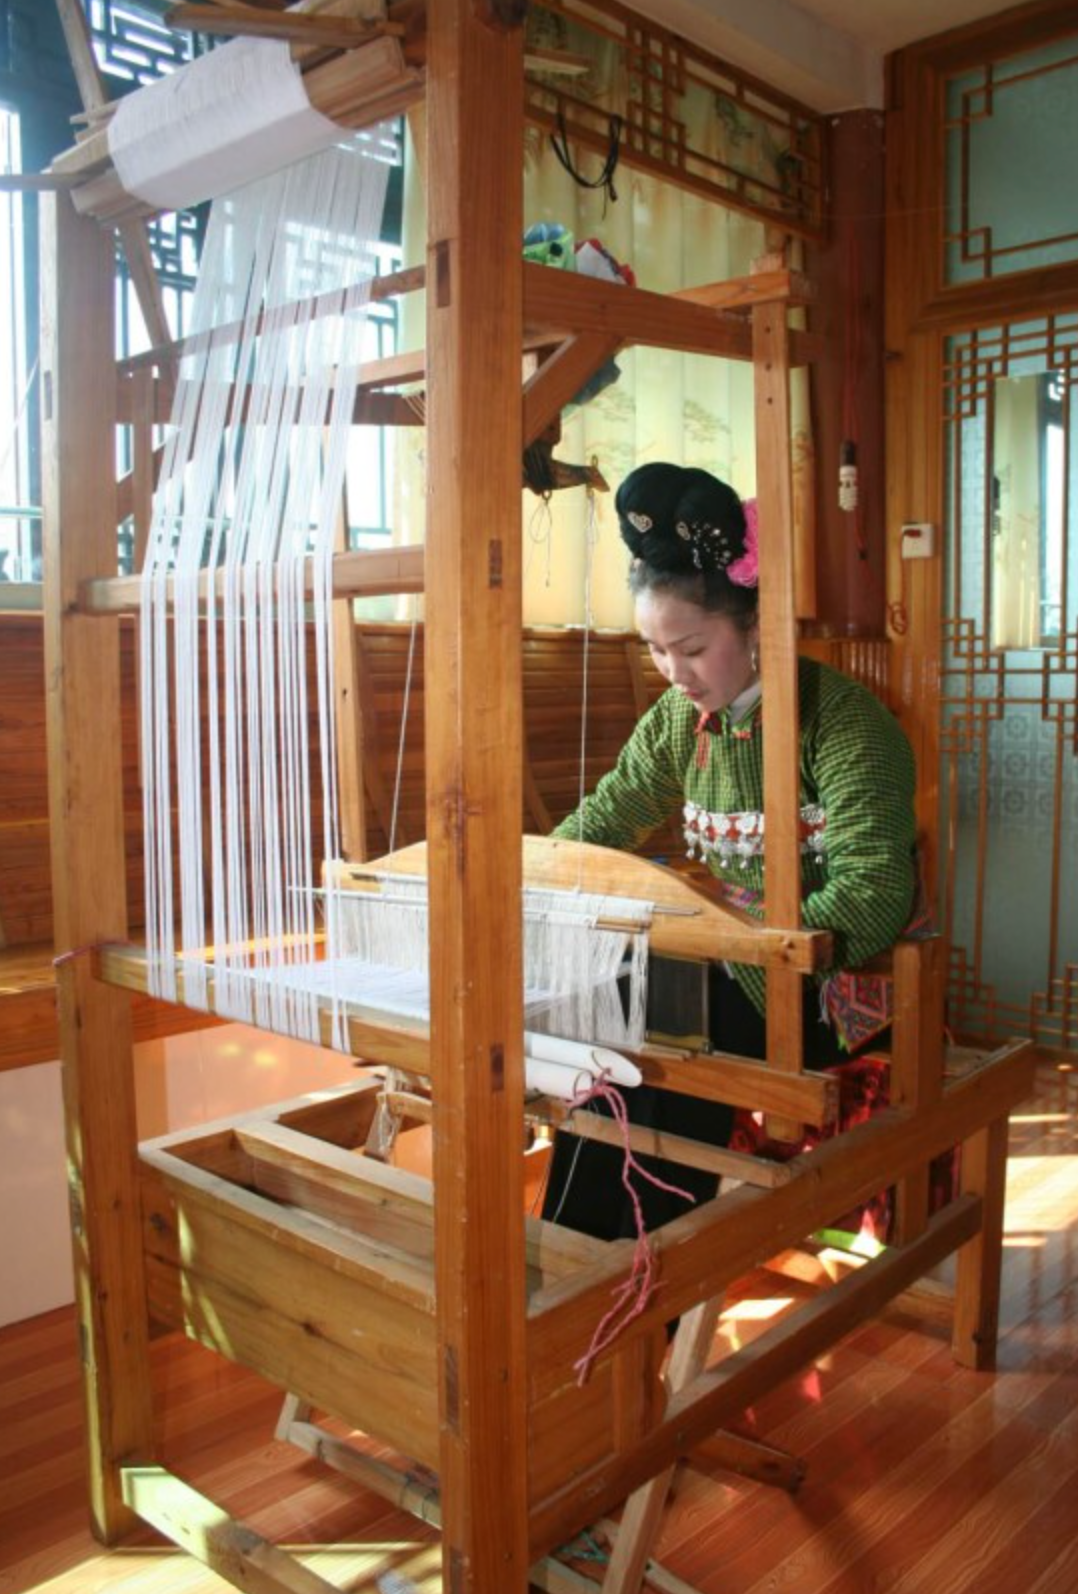 ganxiaozhi handmade fabric artisan